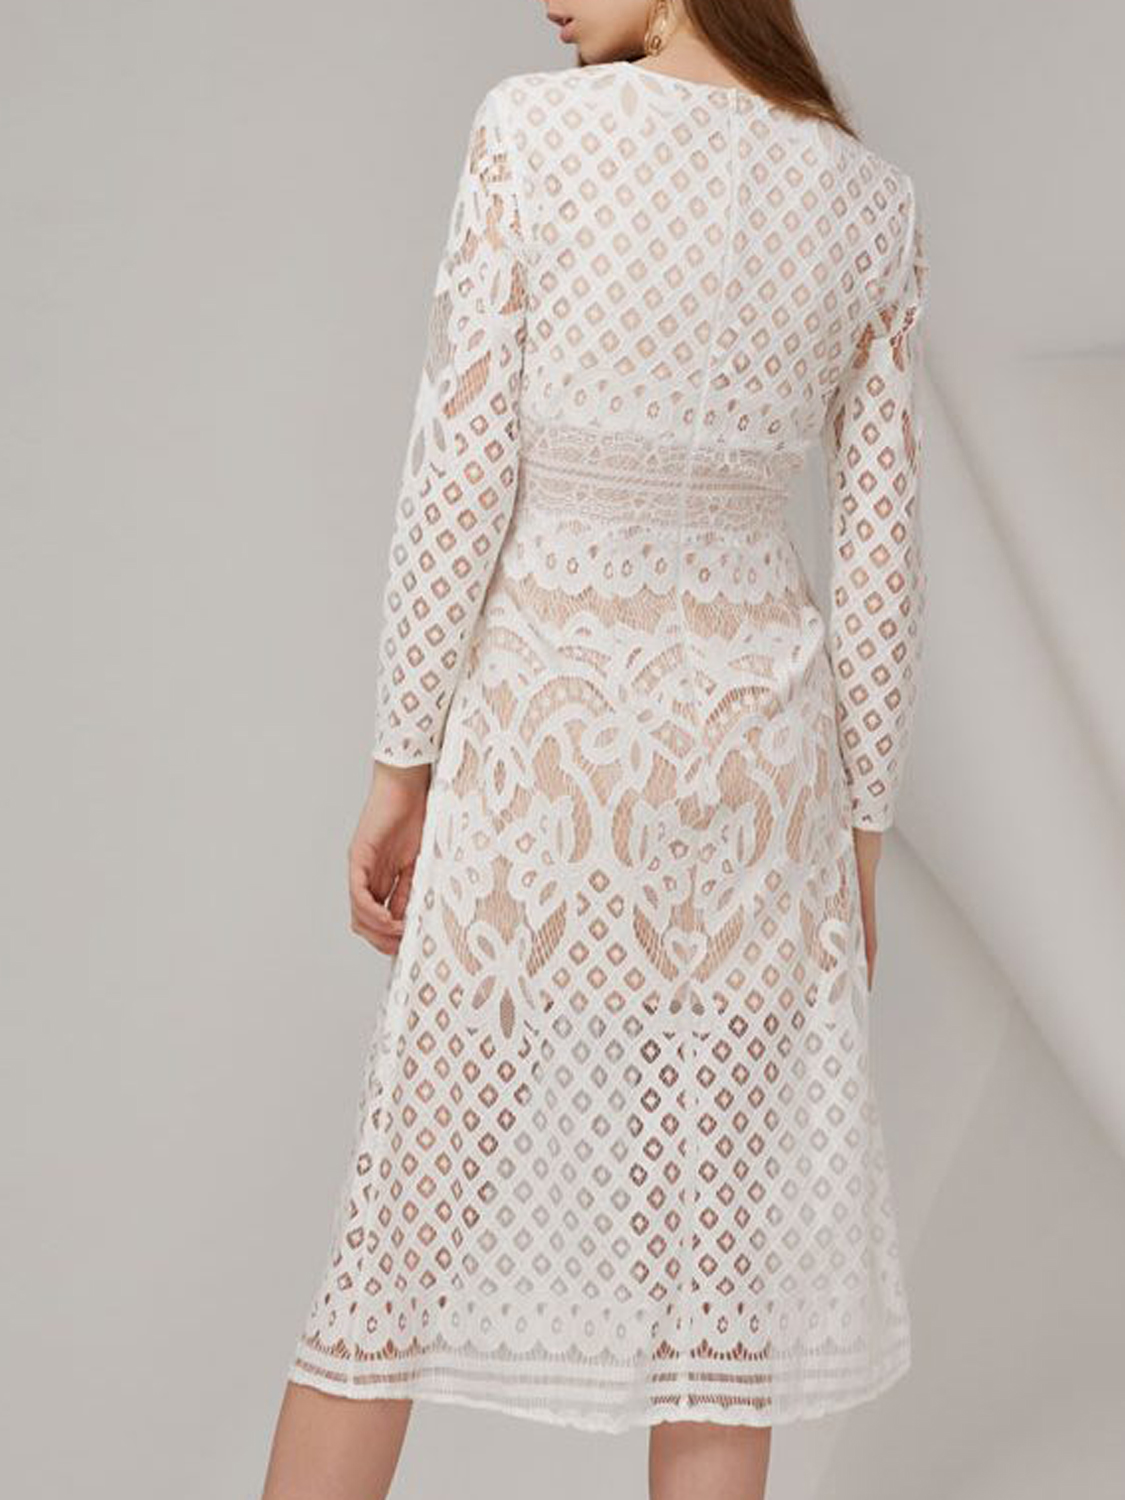 lace overlay dress